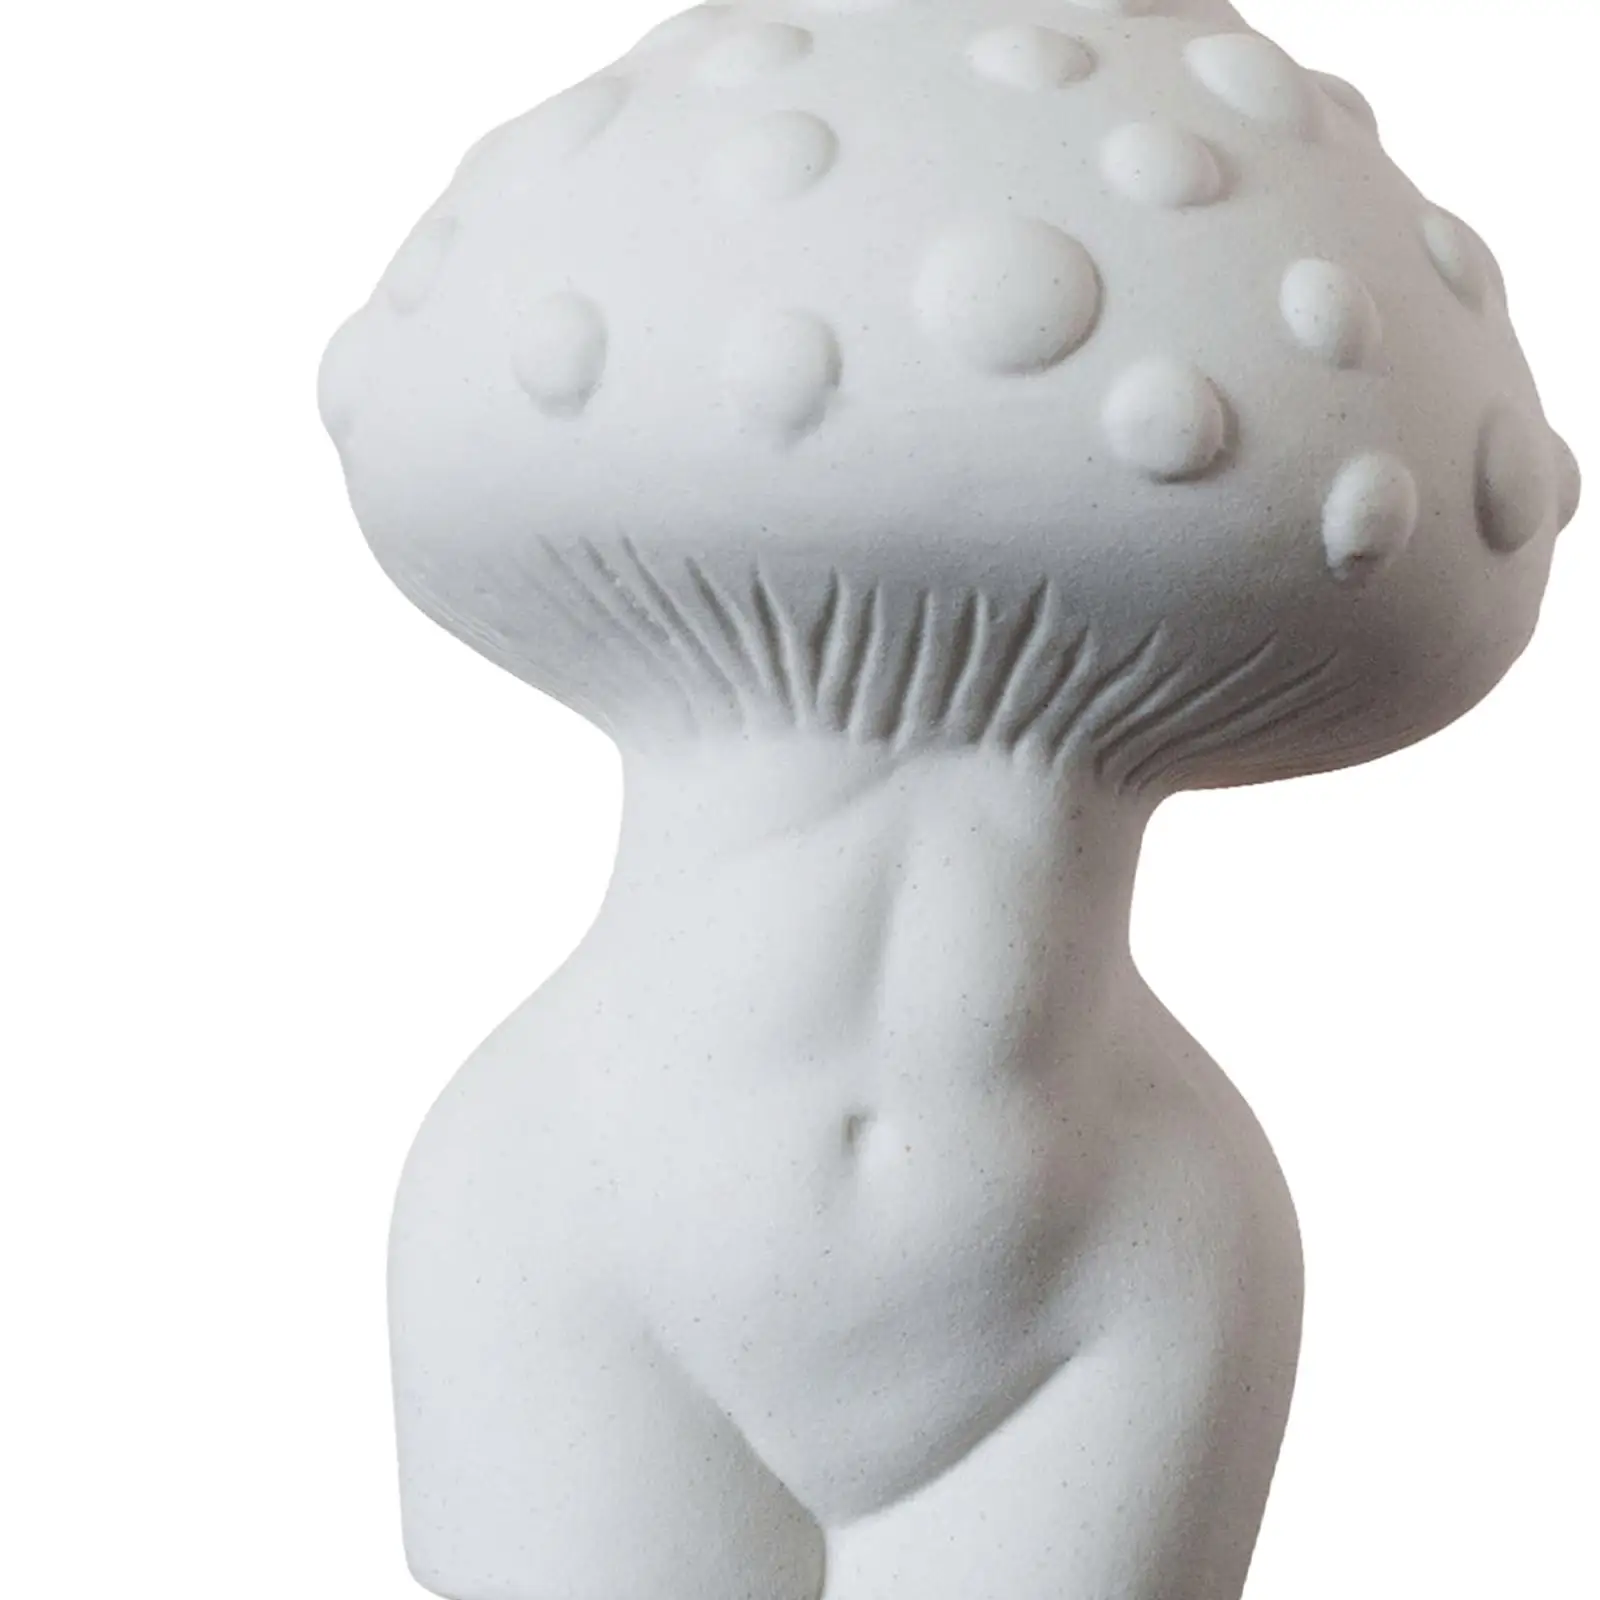 Mushroom Lady Body Vase Planter Vase for Table Centerpiece Home Wedding